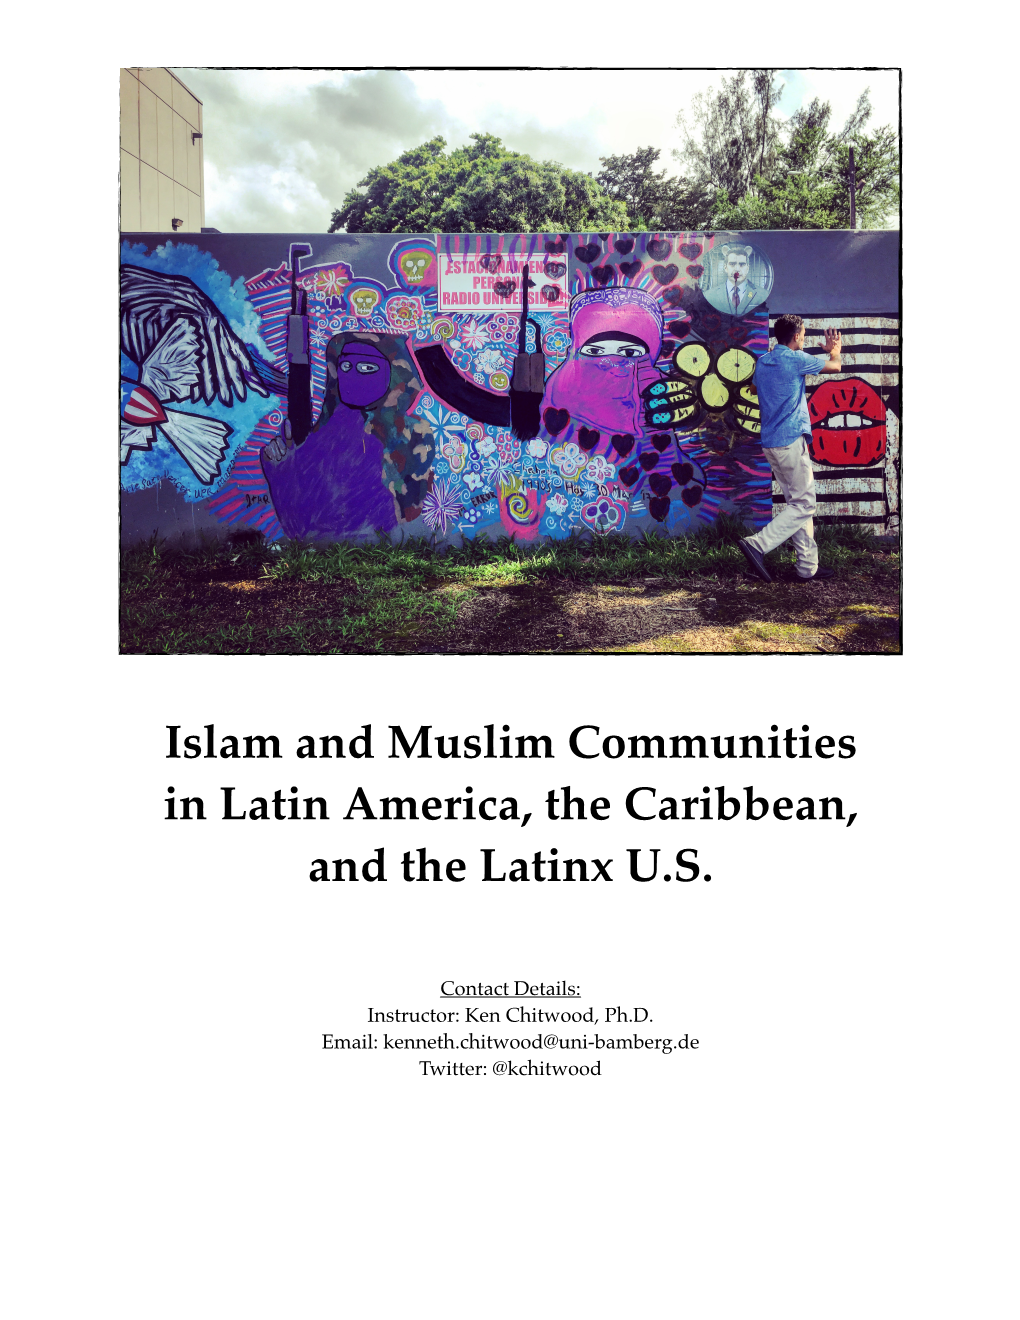 Islam and Muslim Communities in Latin America, the Caribbean, and the Latinx U.S